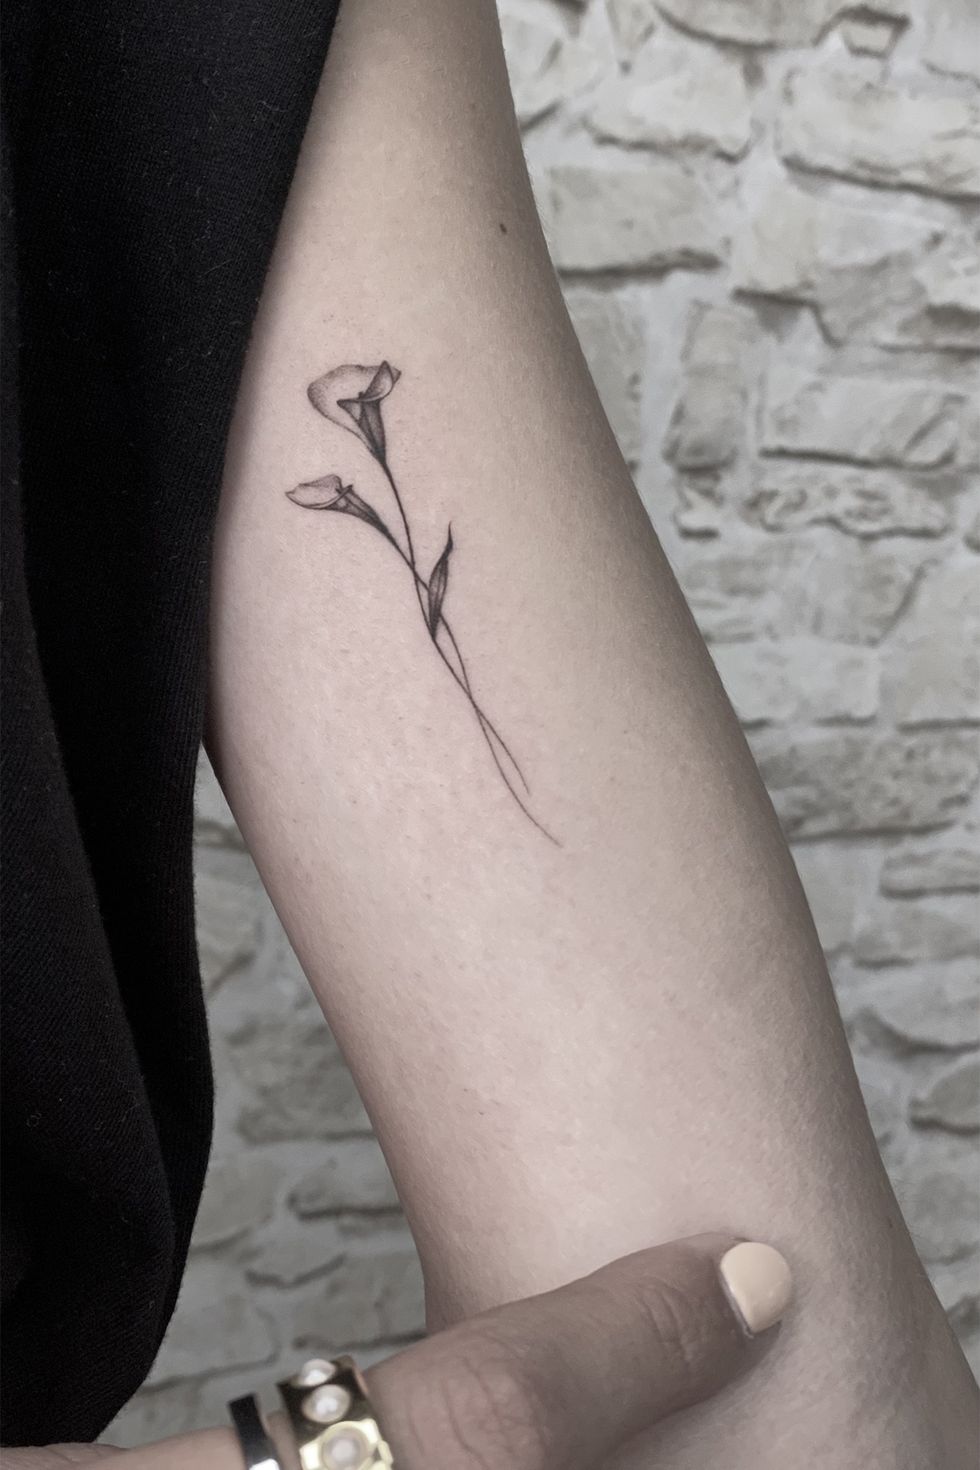 16 tatuajes de flor de loto: significado, dibujos, minimalistas